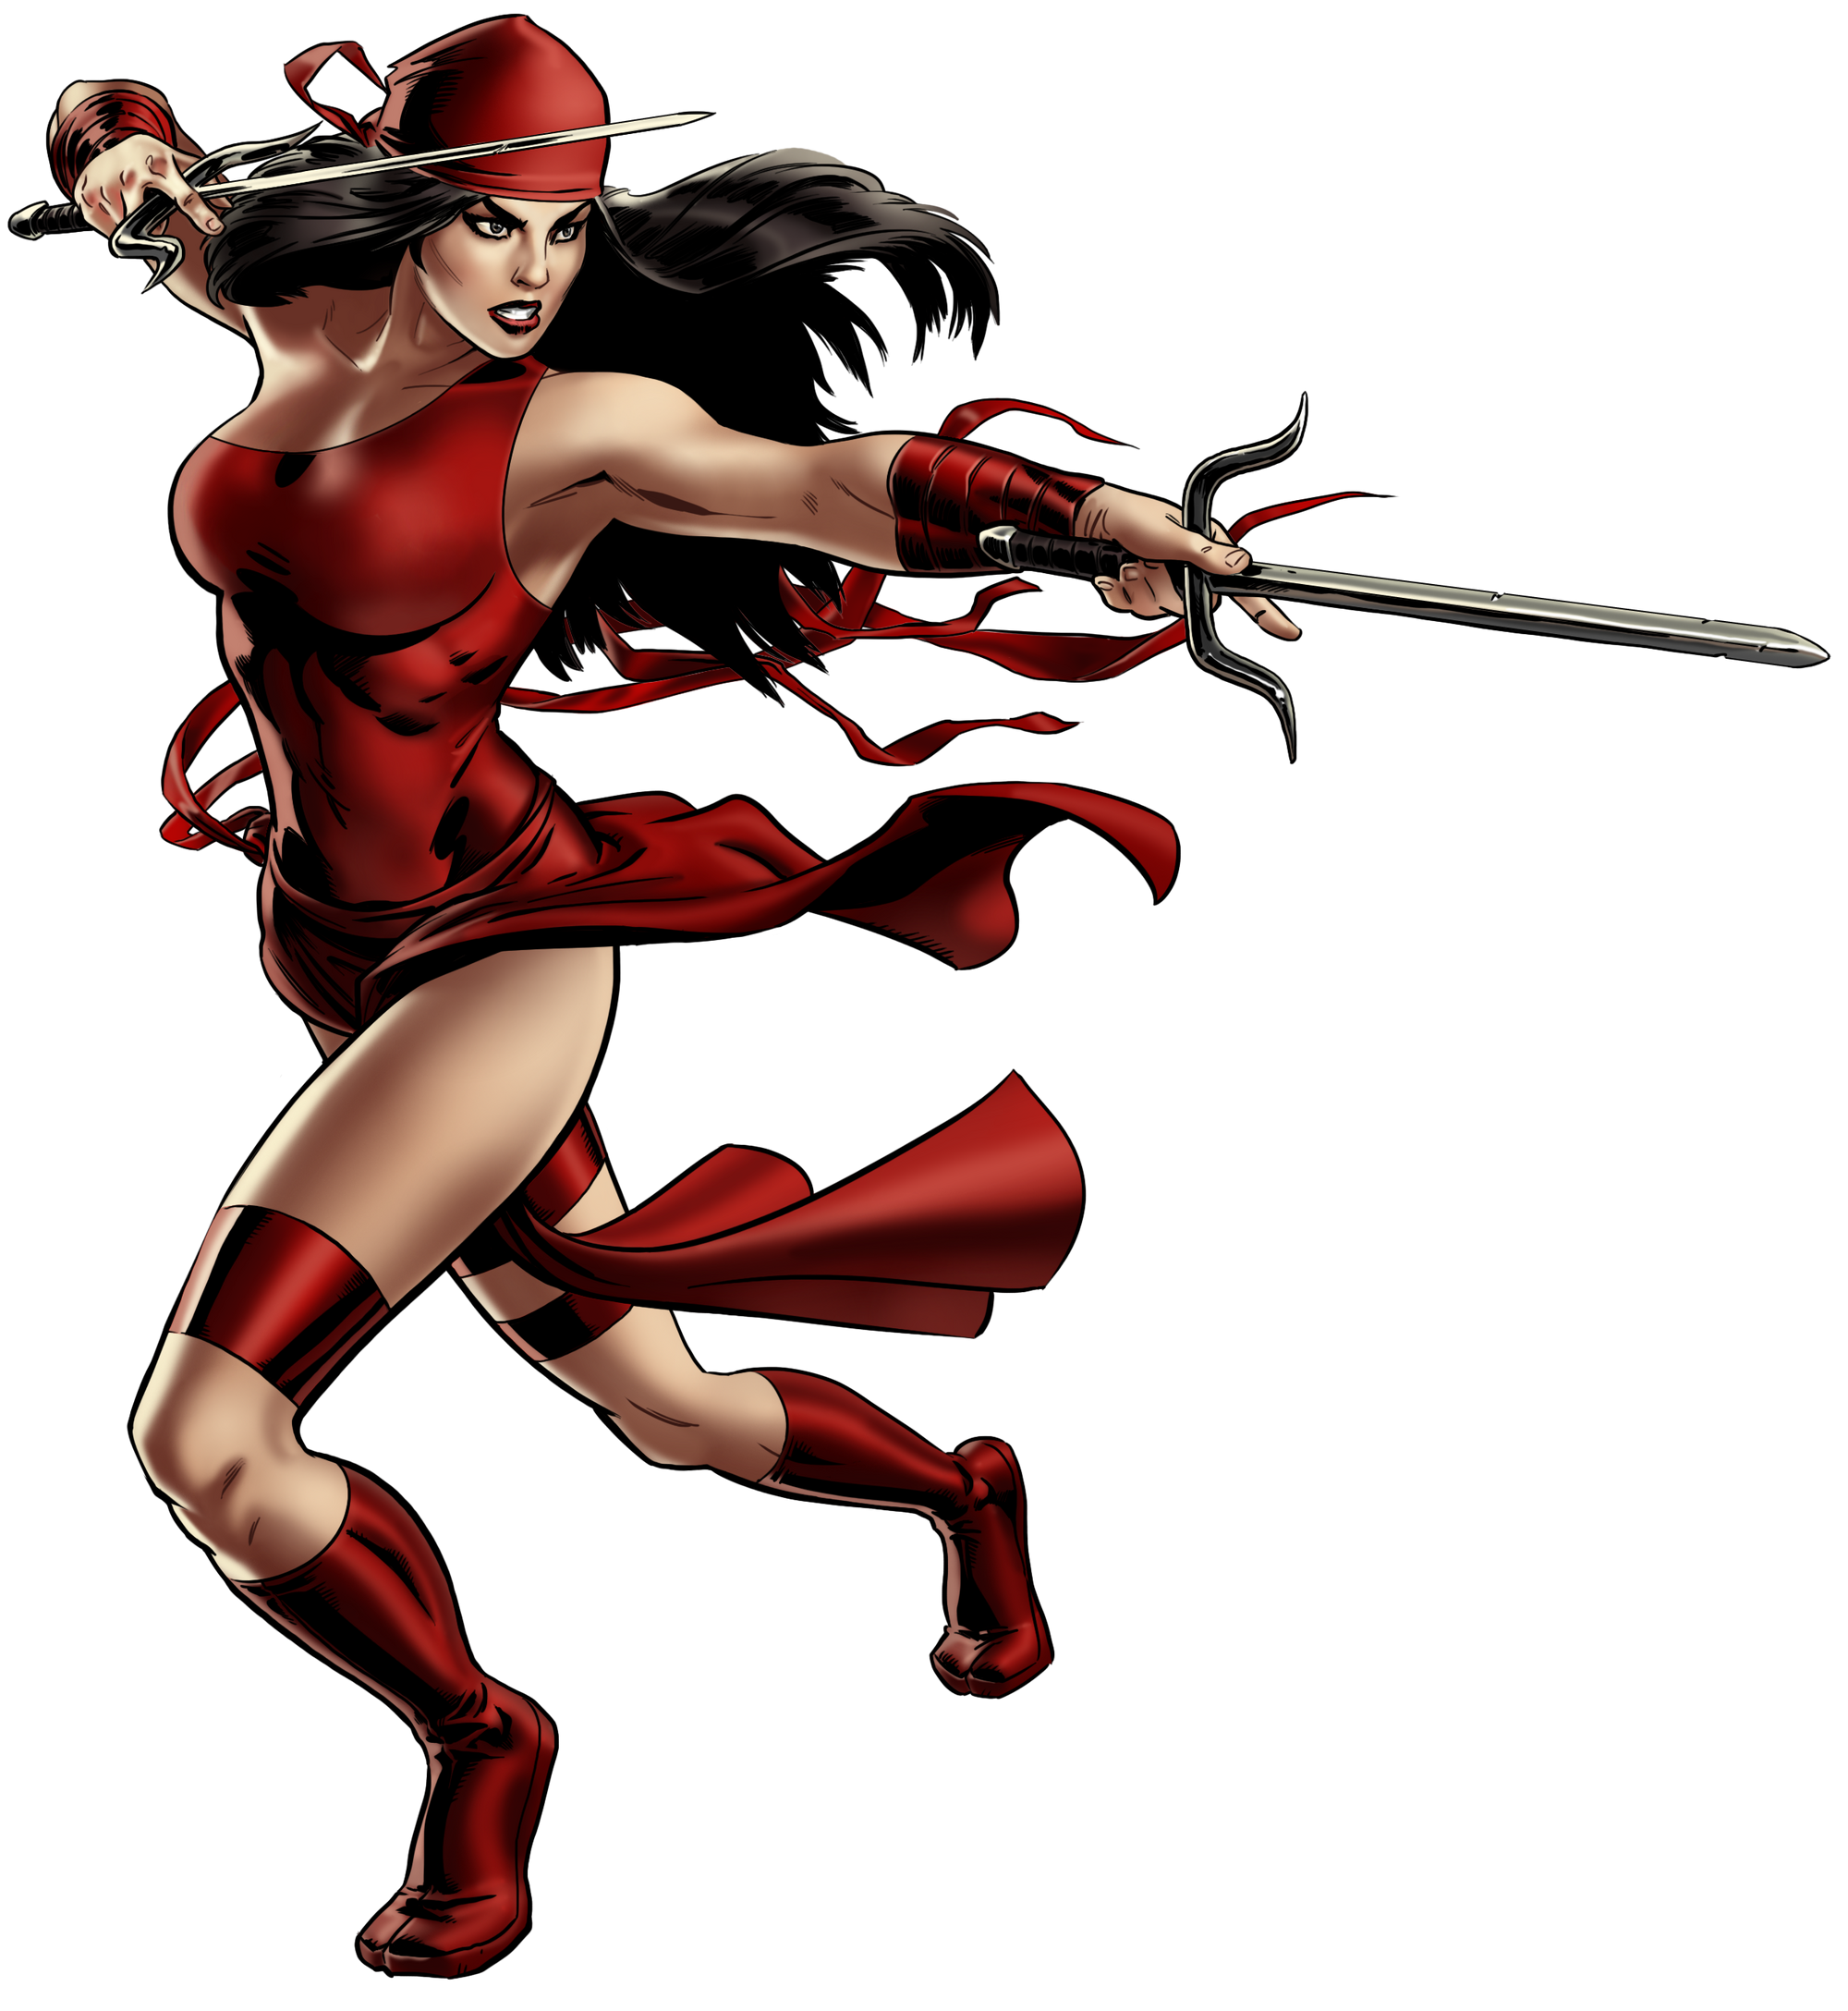 Elektra | Heroes Wiki | FANDOM powered by Wikia